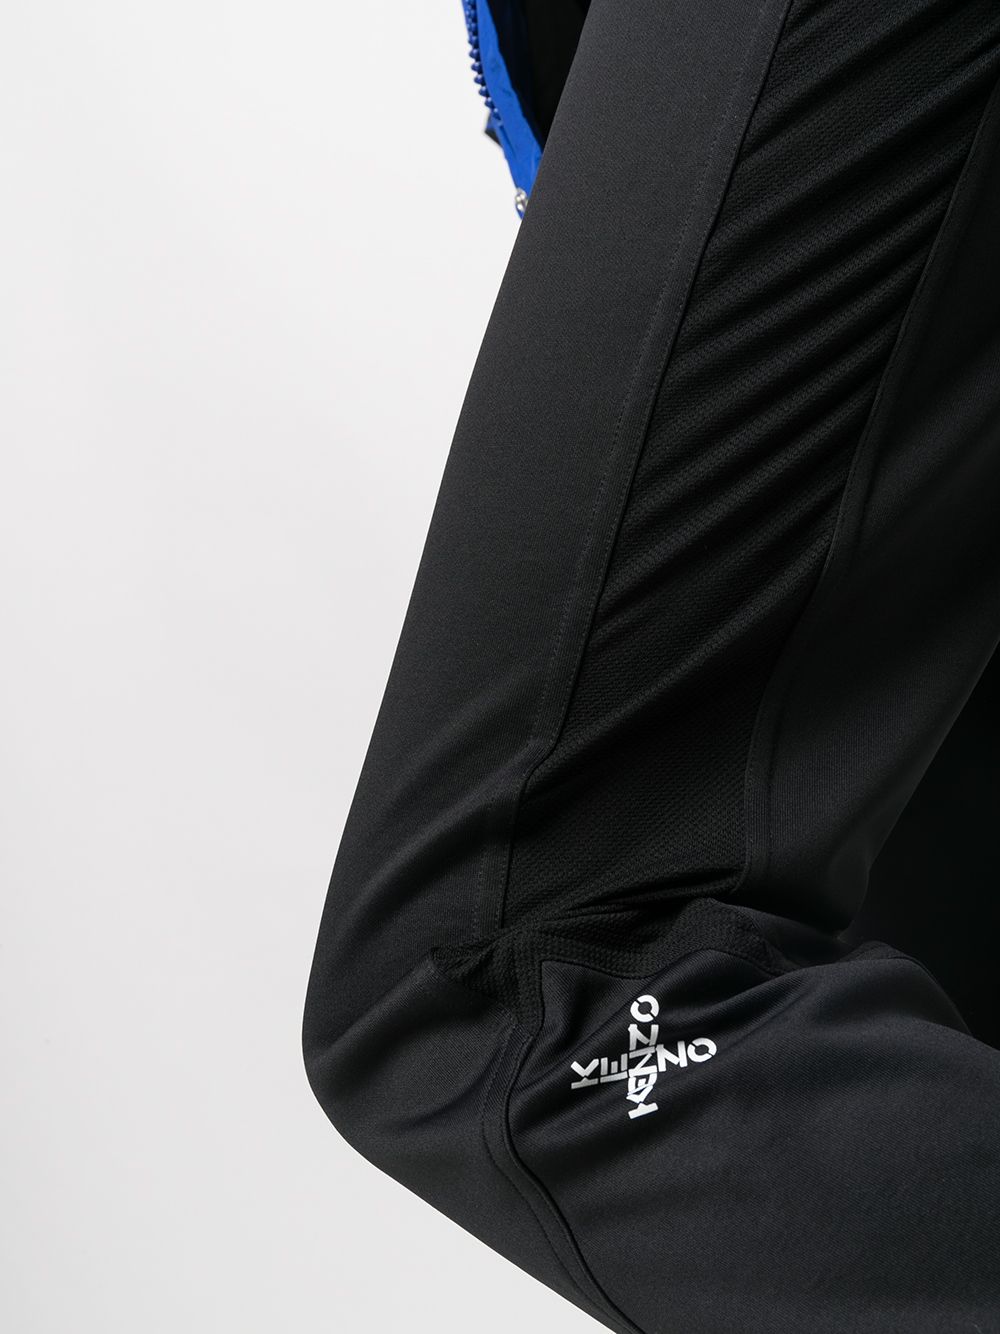 фото Kenzo спортивные брюки с логотипом